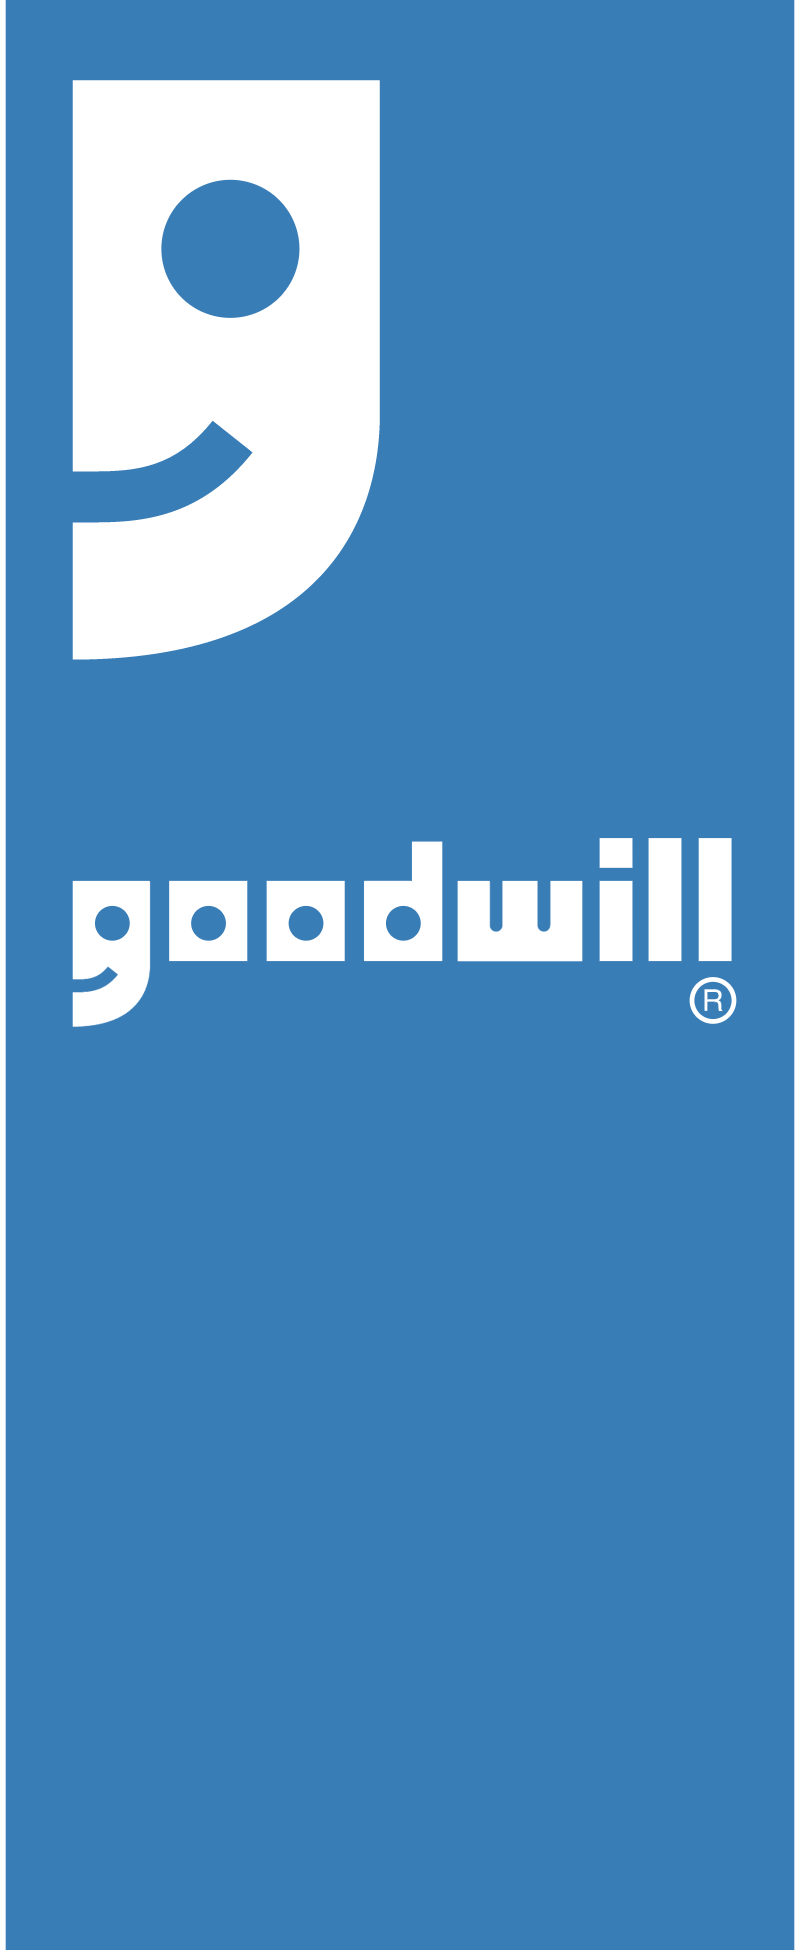 Goodwill 2 vector logo